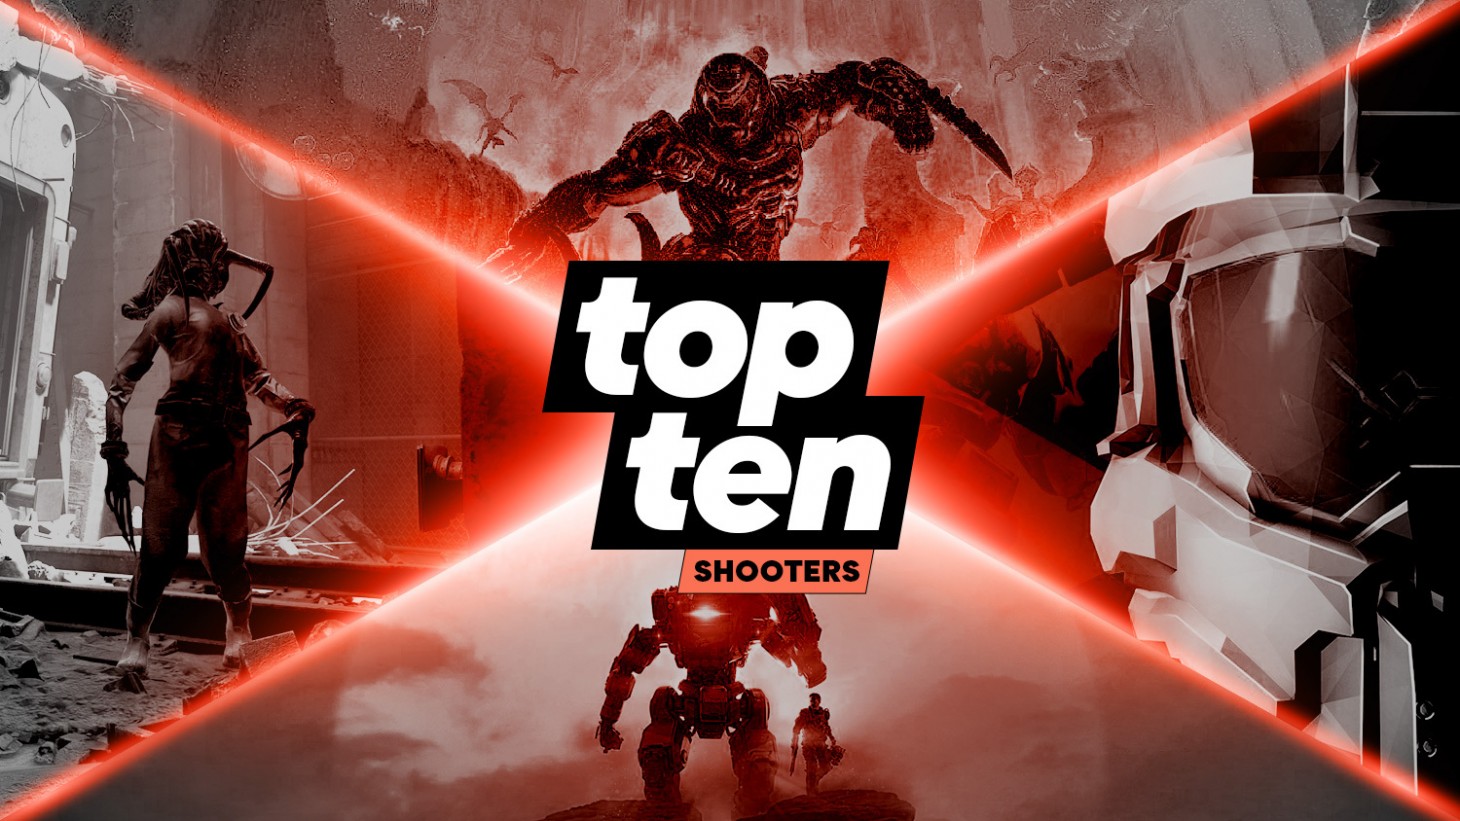 gi top ten shooter games main image 2021